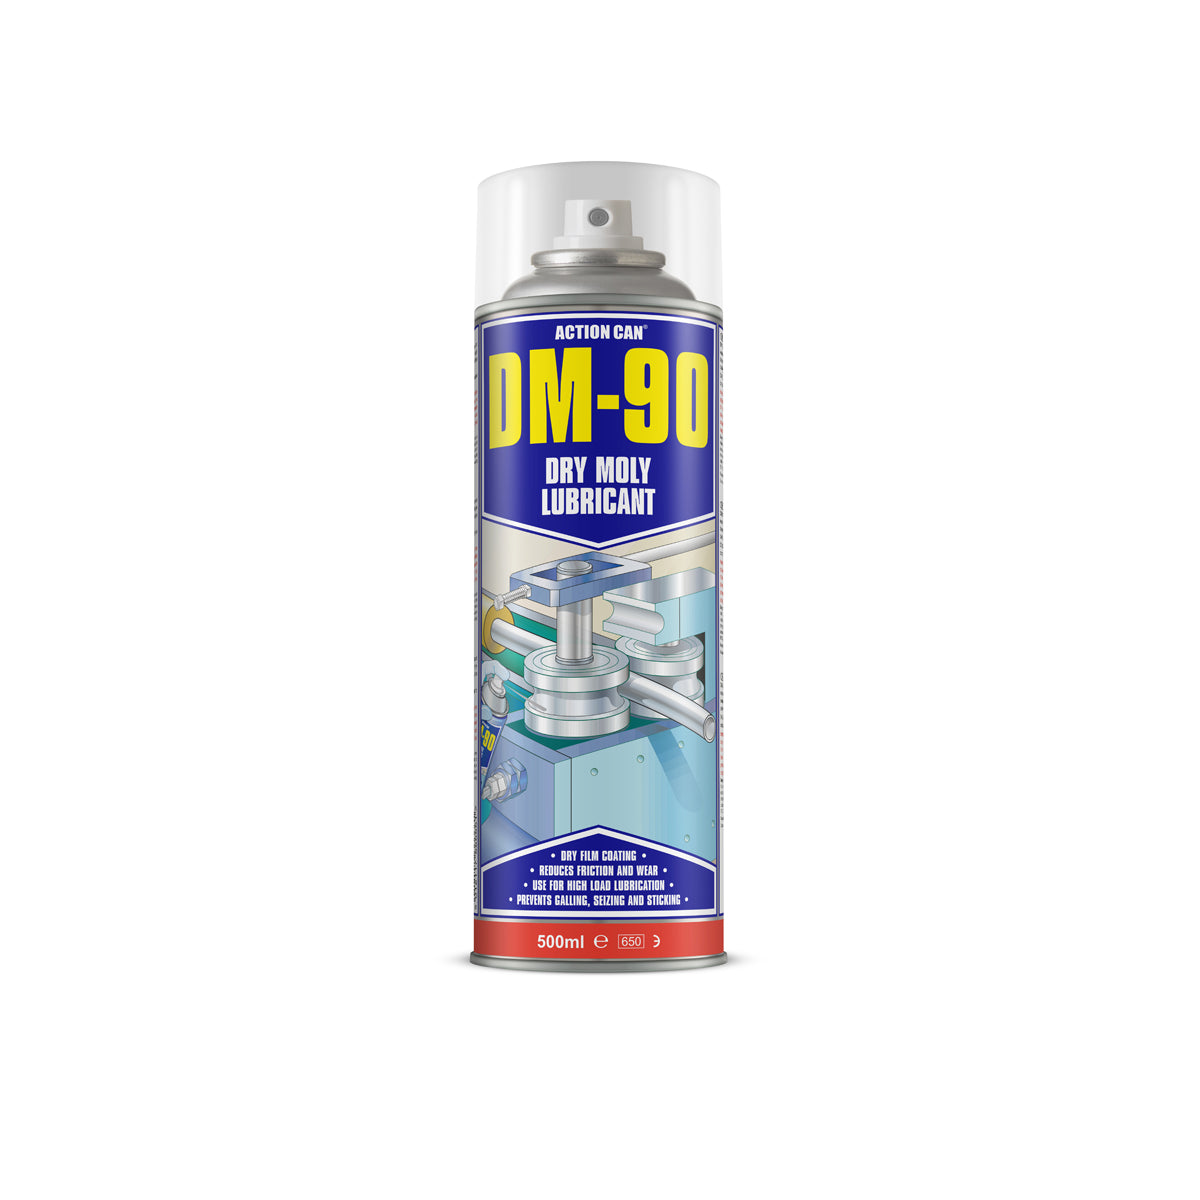 Action Can DM-90 Dry Moly Disulphide Aerosol Spray Lubricant Resin 500ml